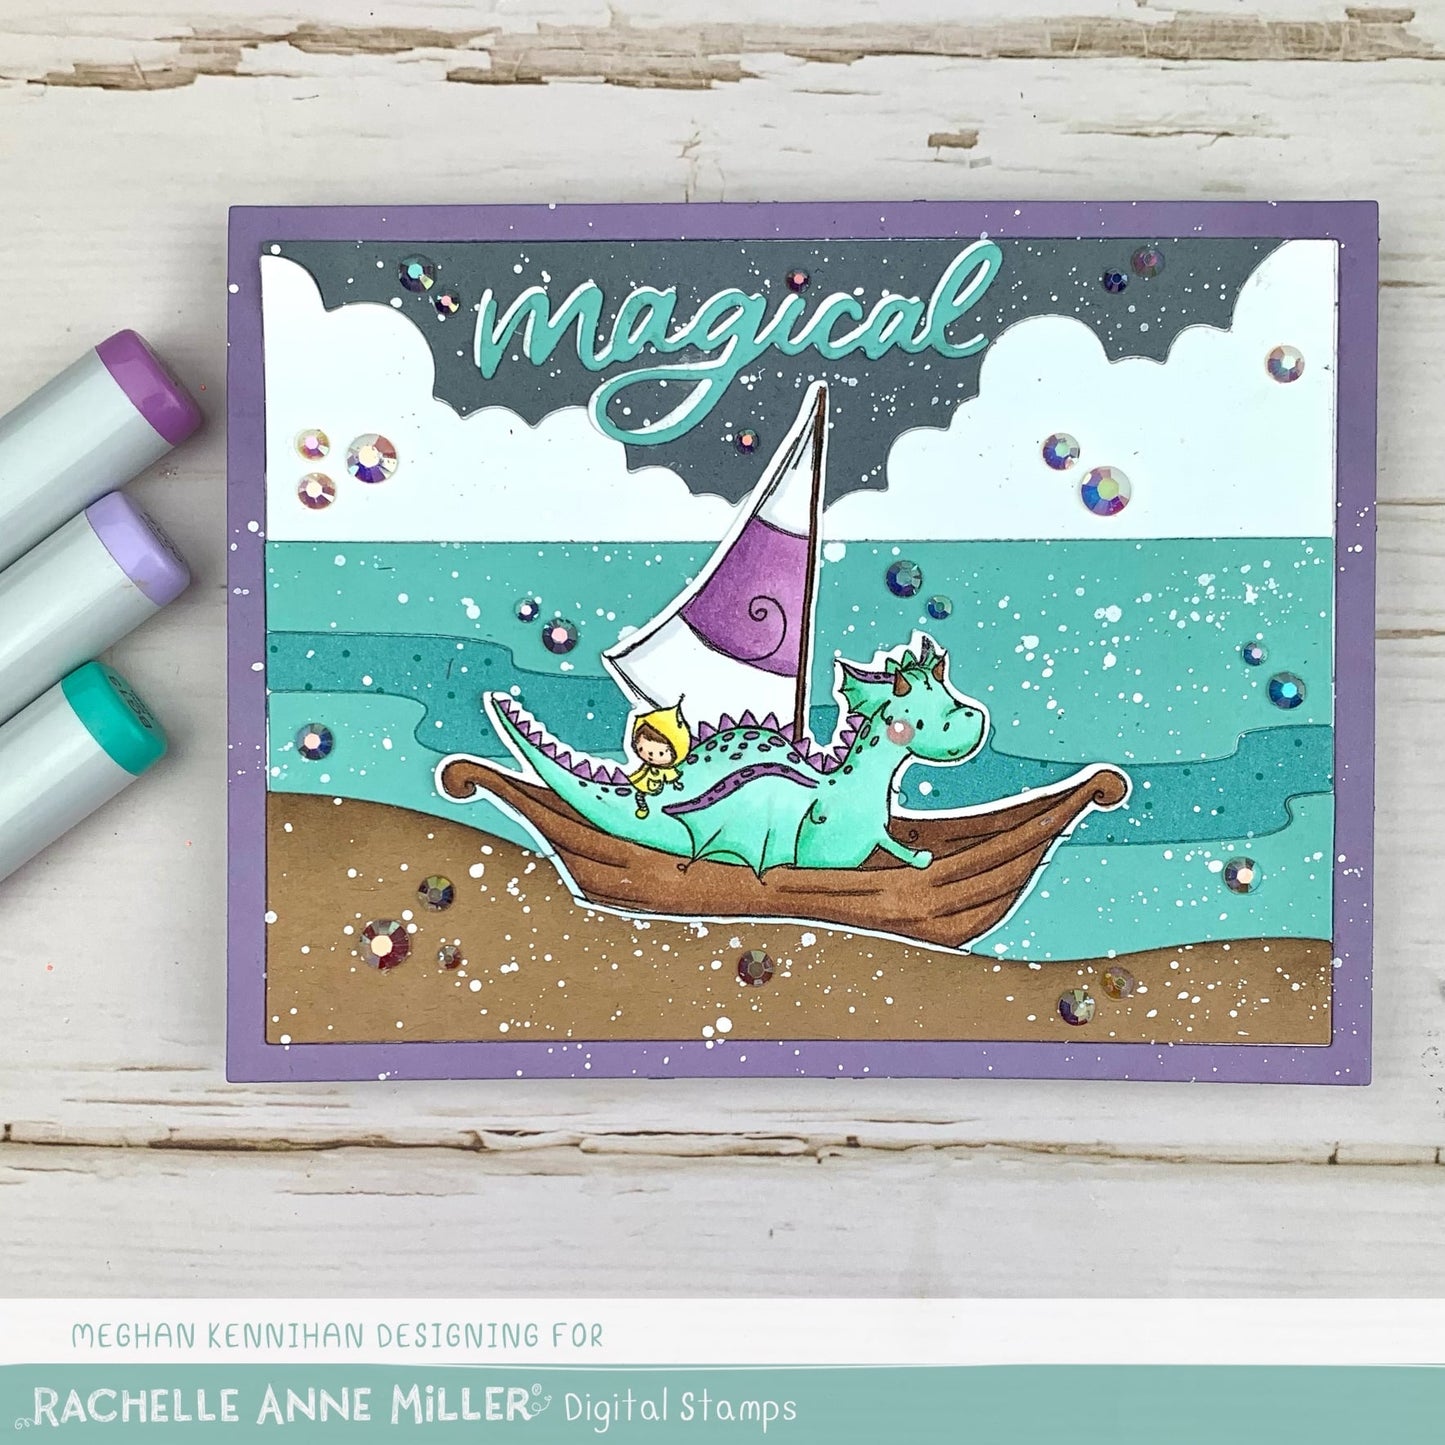 'Dragon Boat' Digital Stamp